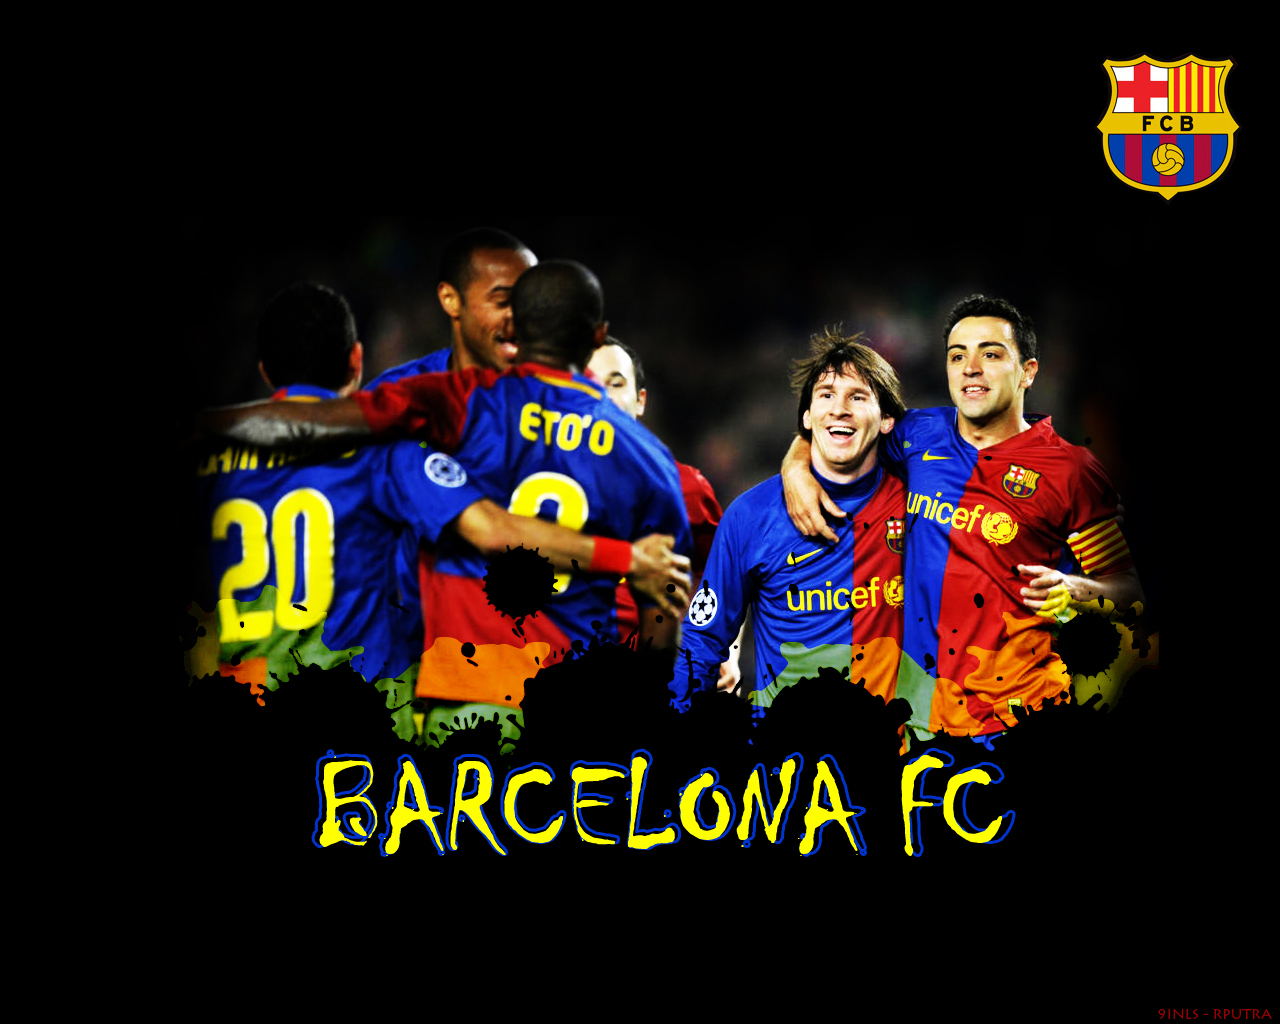 FC Barcelona 009 team